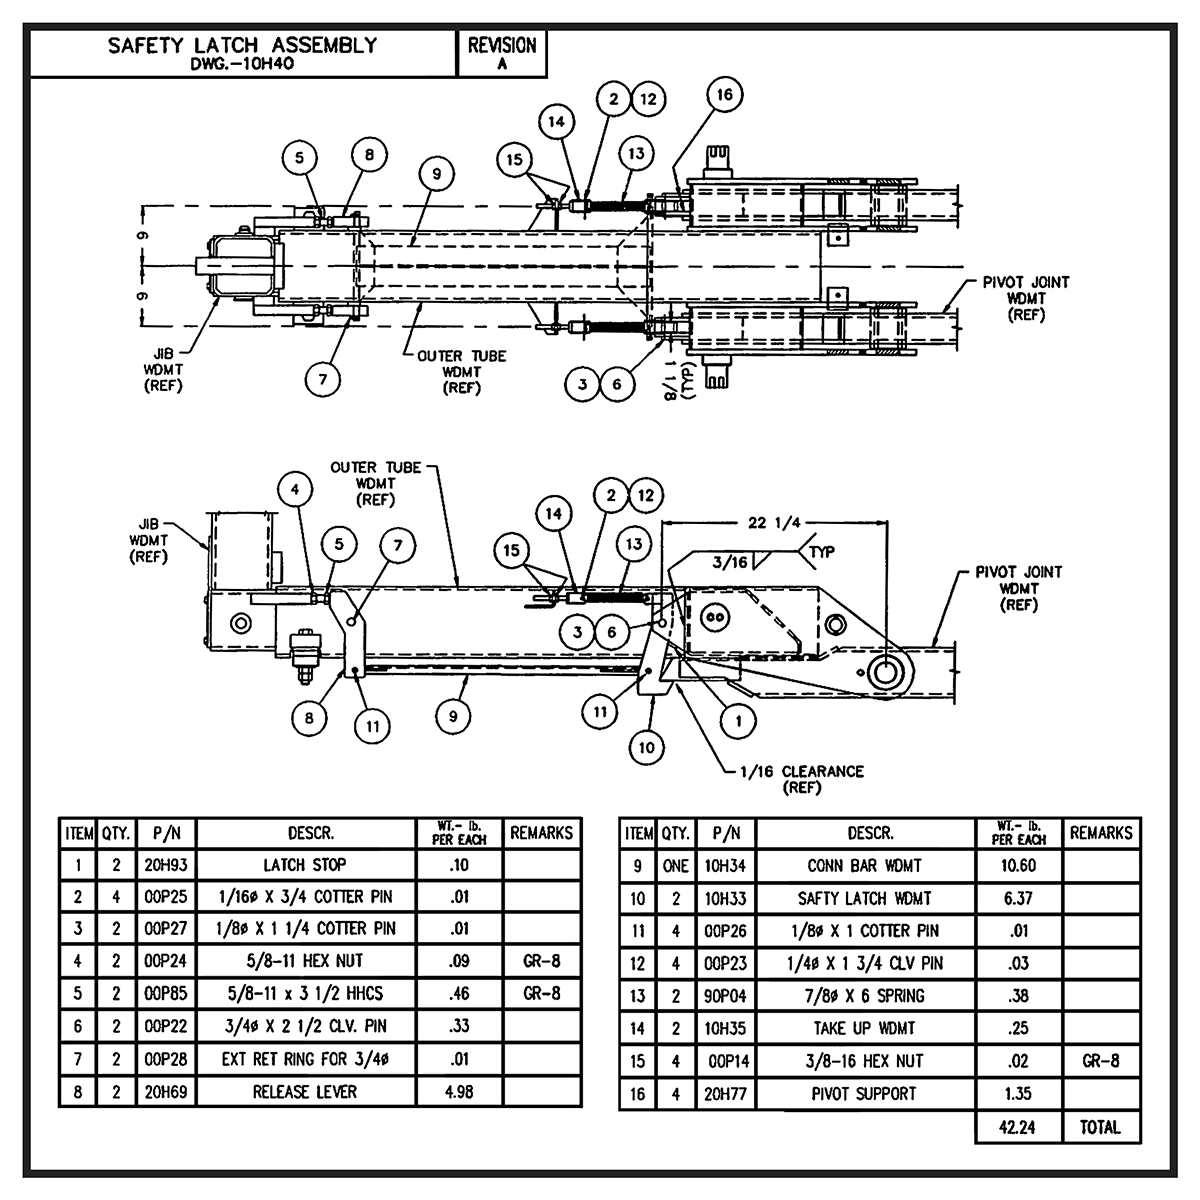 Swaploader SL-125 Safety Latch Assembly Diagram